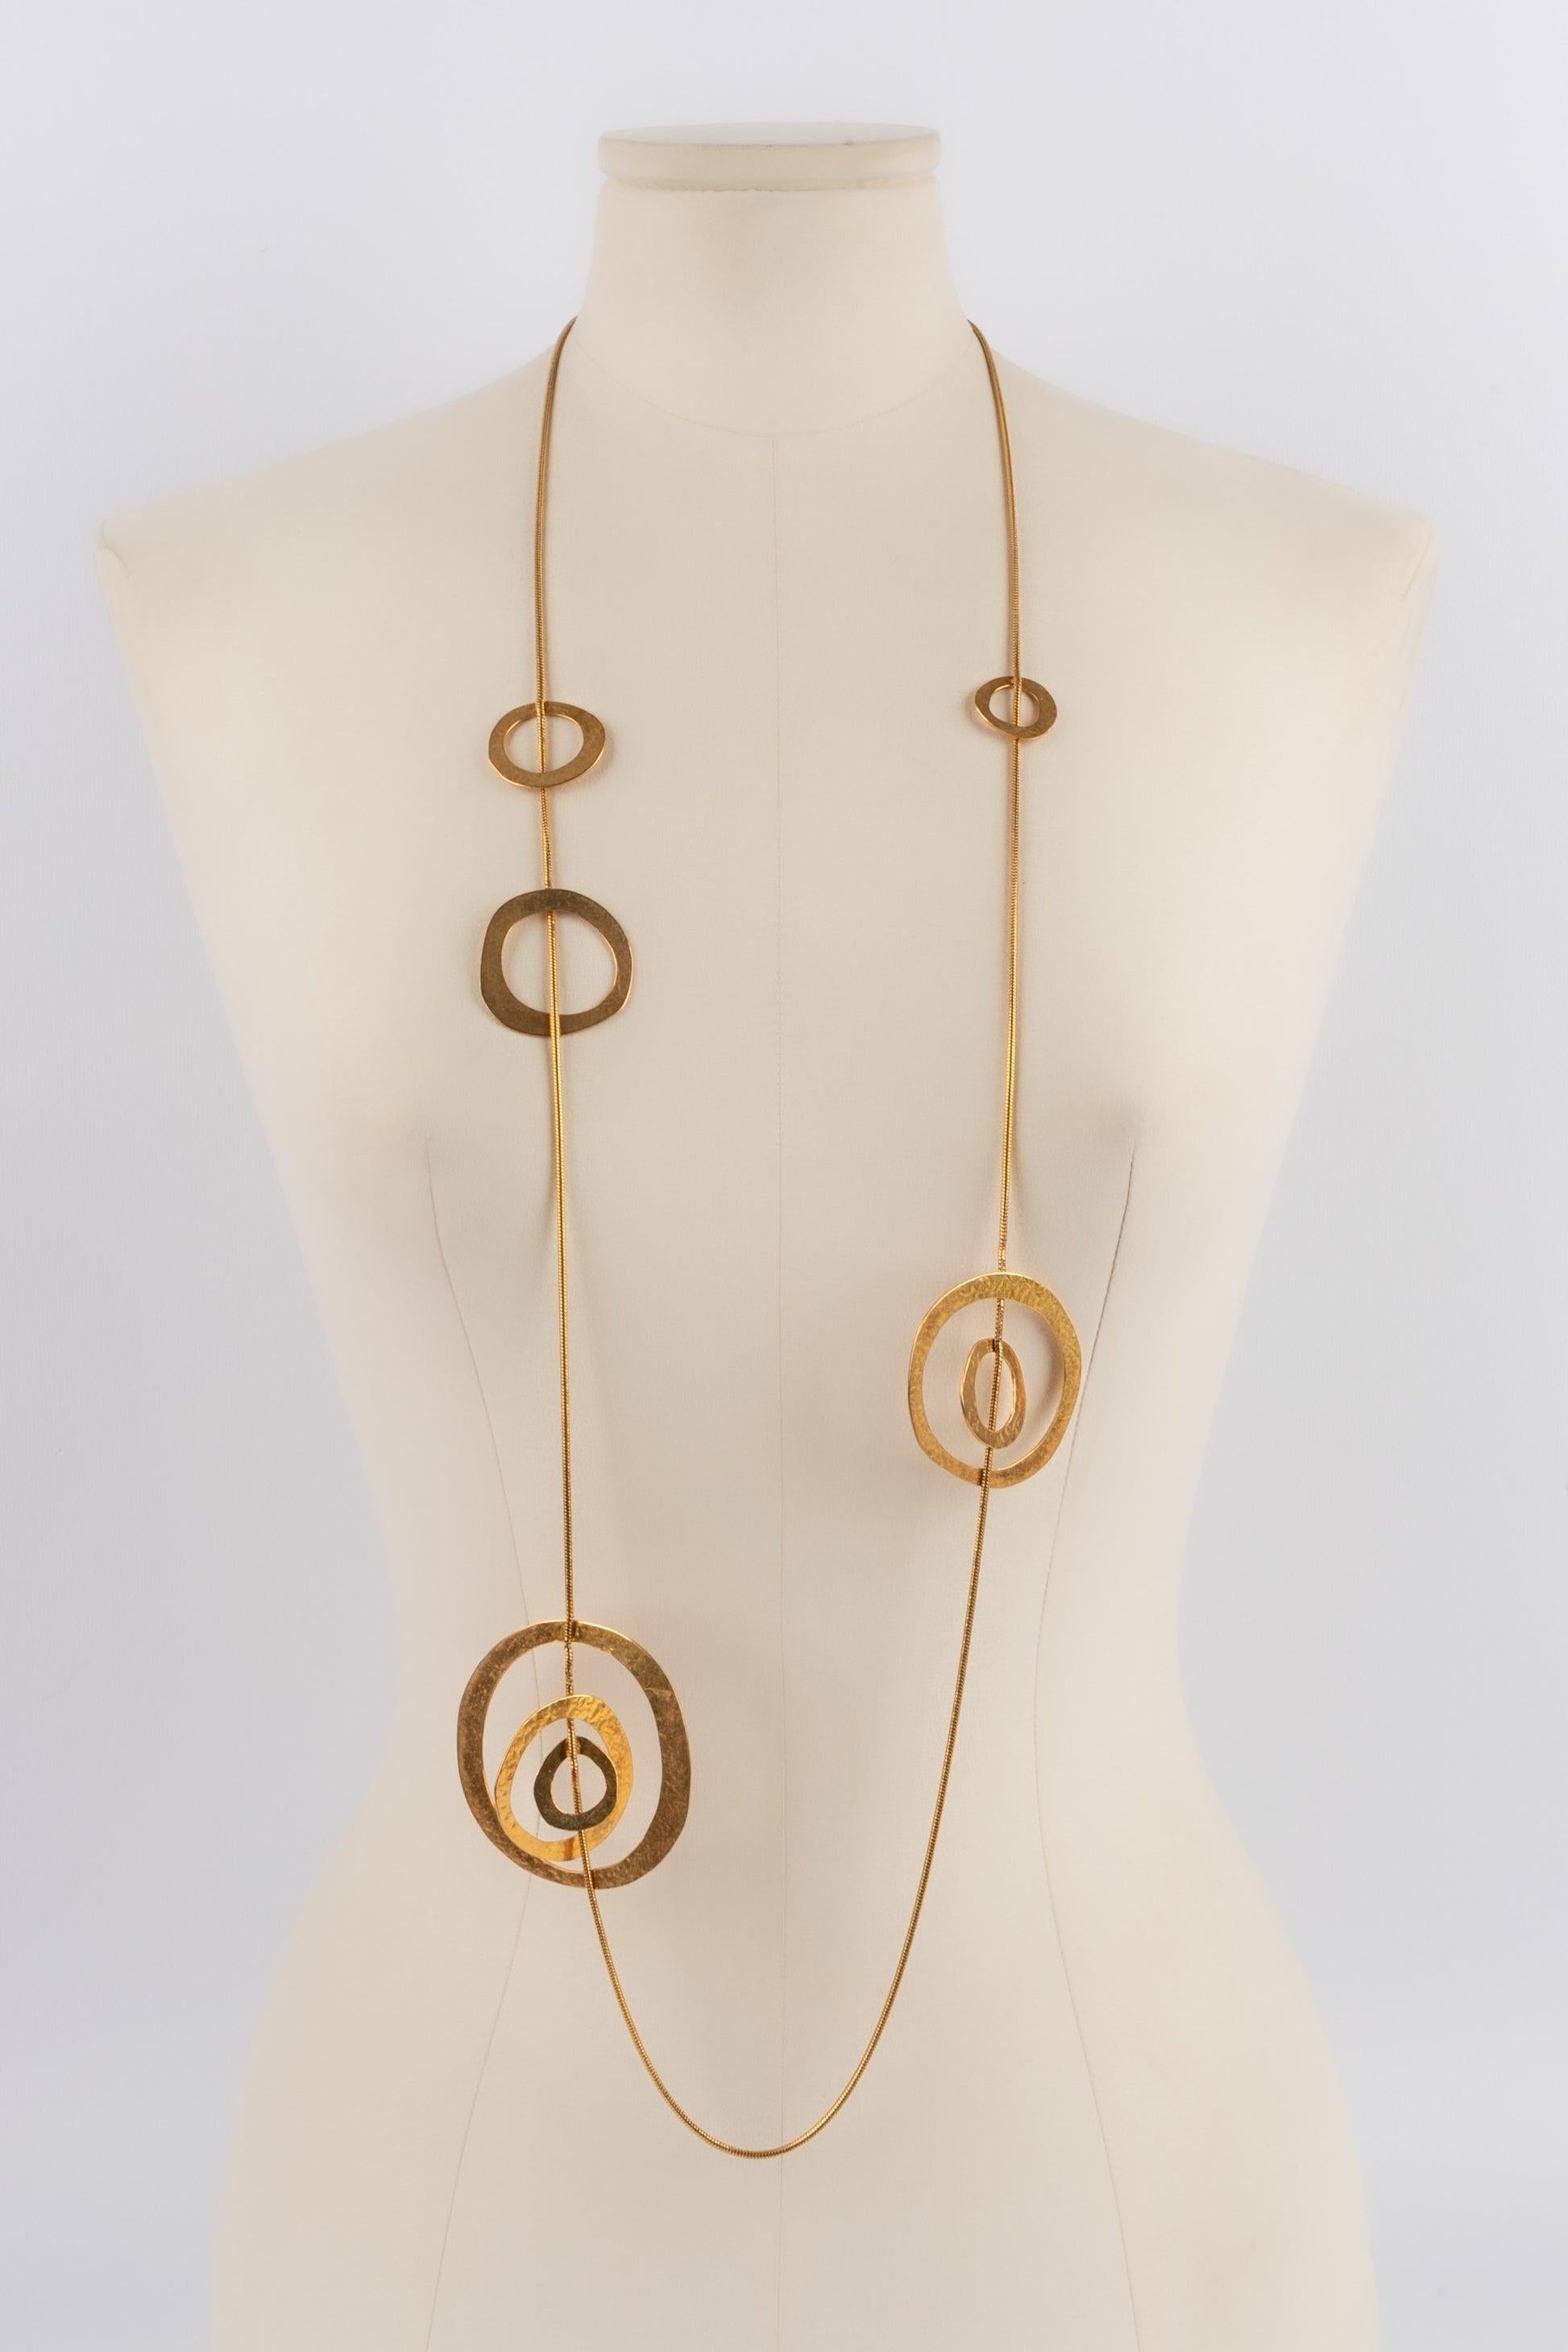 Van Der Straeten Golden Beaten Brass Necklace, 2000s For Sale 3